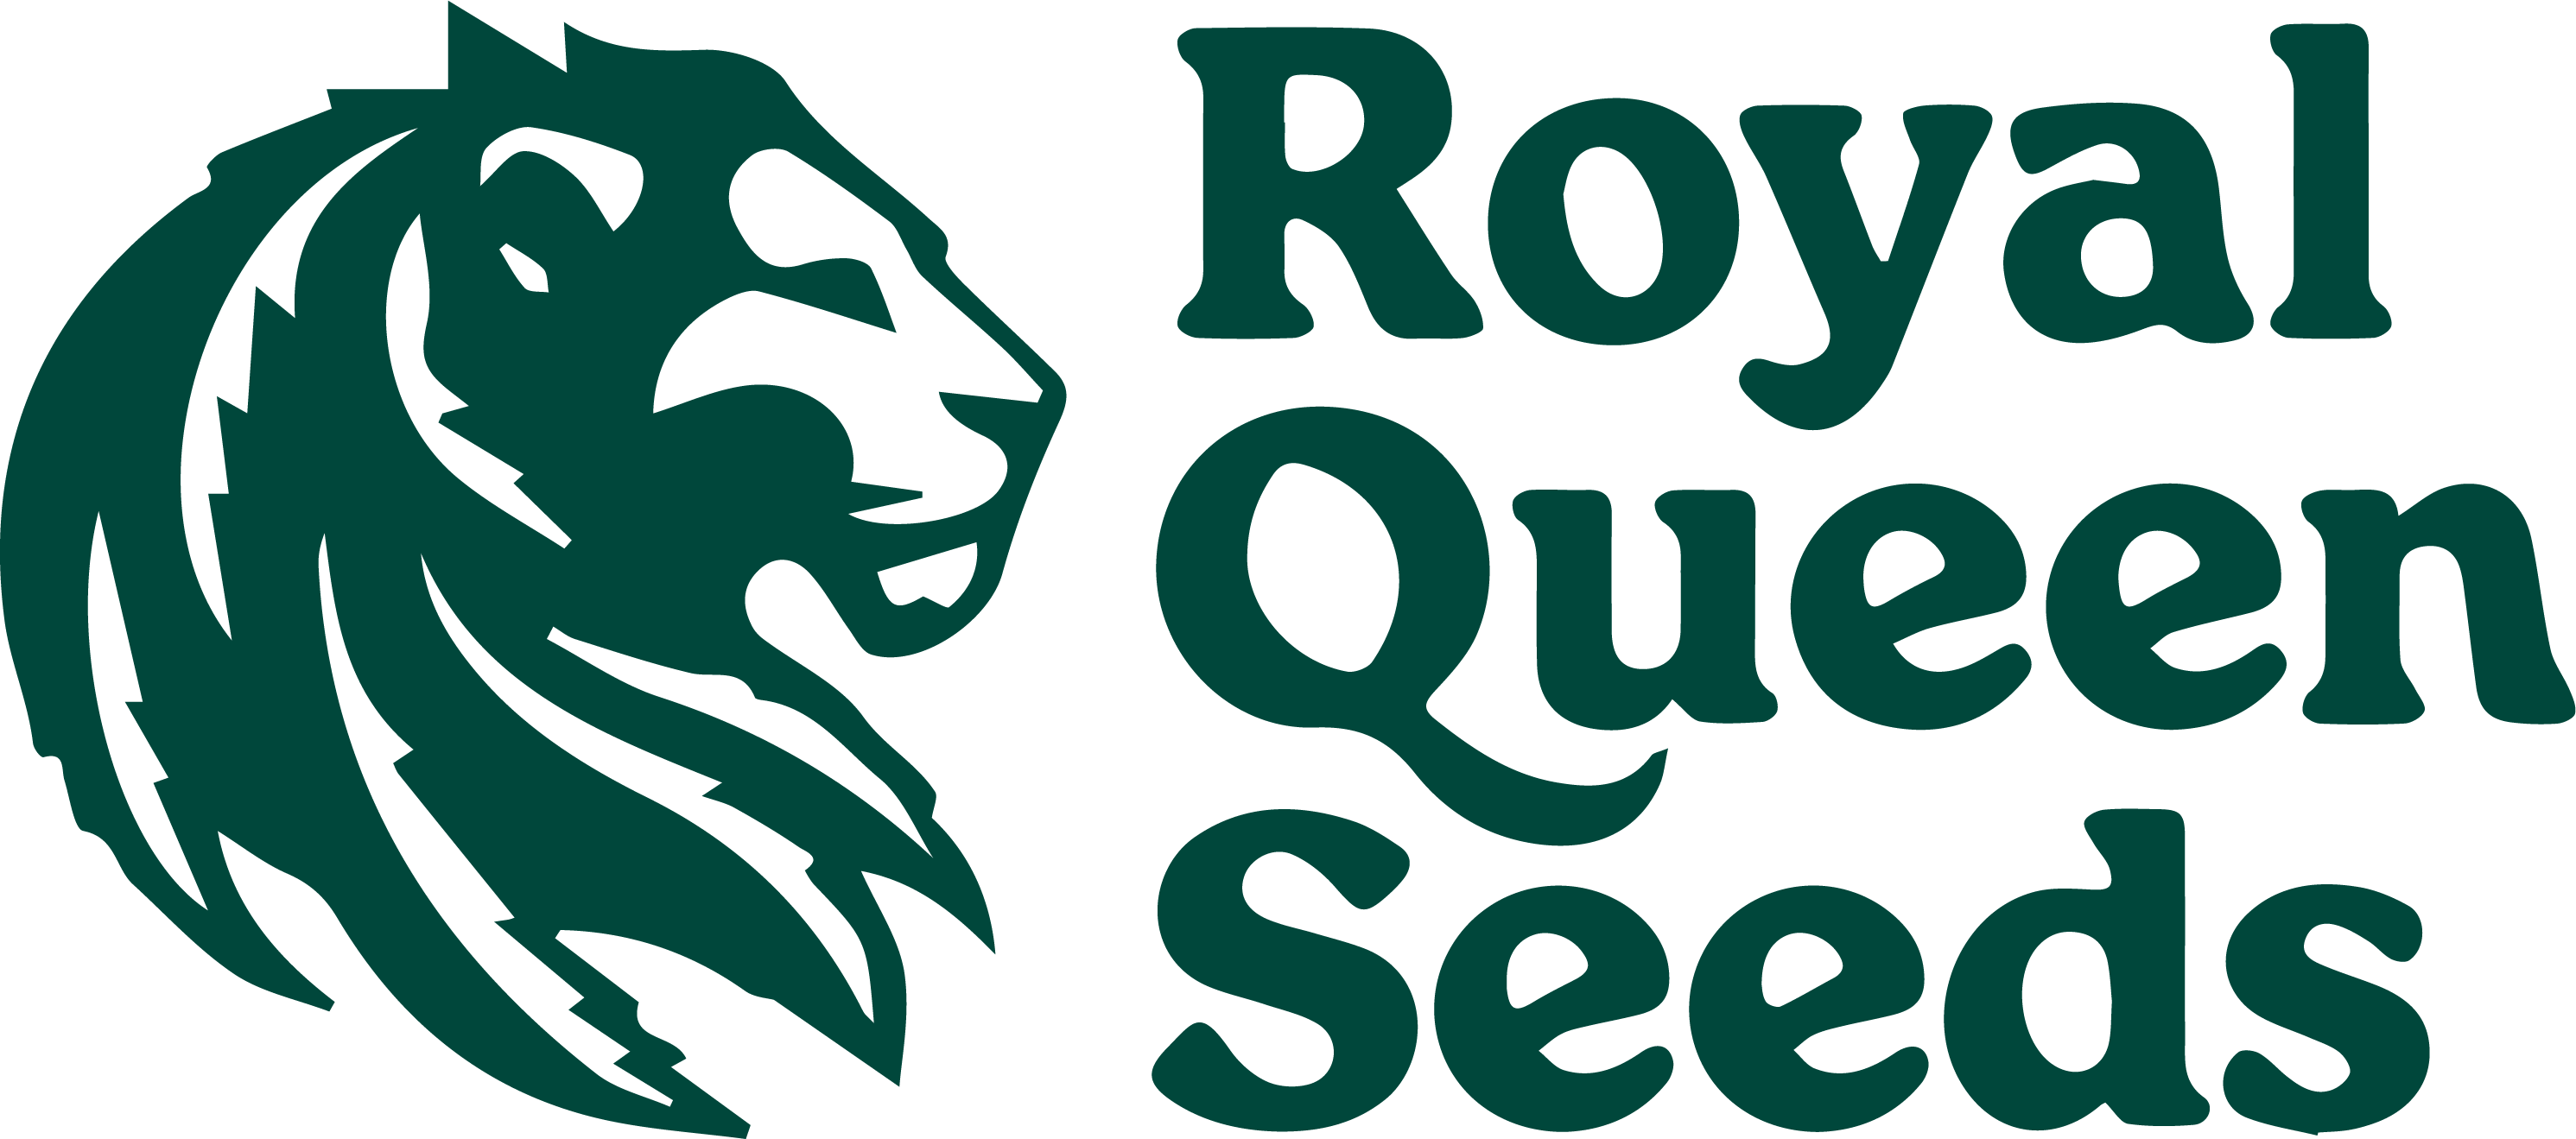 Royal Queen Seeds - Feminized Cannabis Seeds - Autoflower cannabis seeds